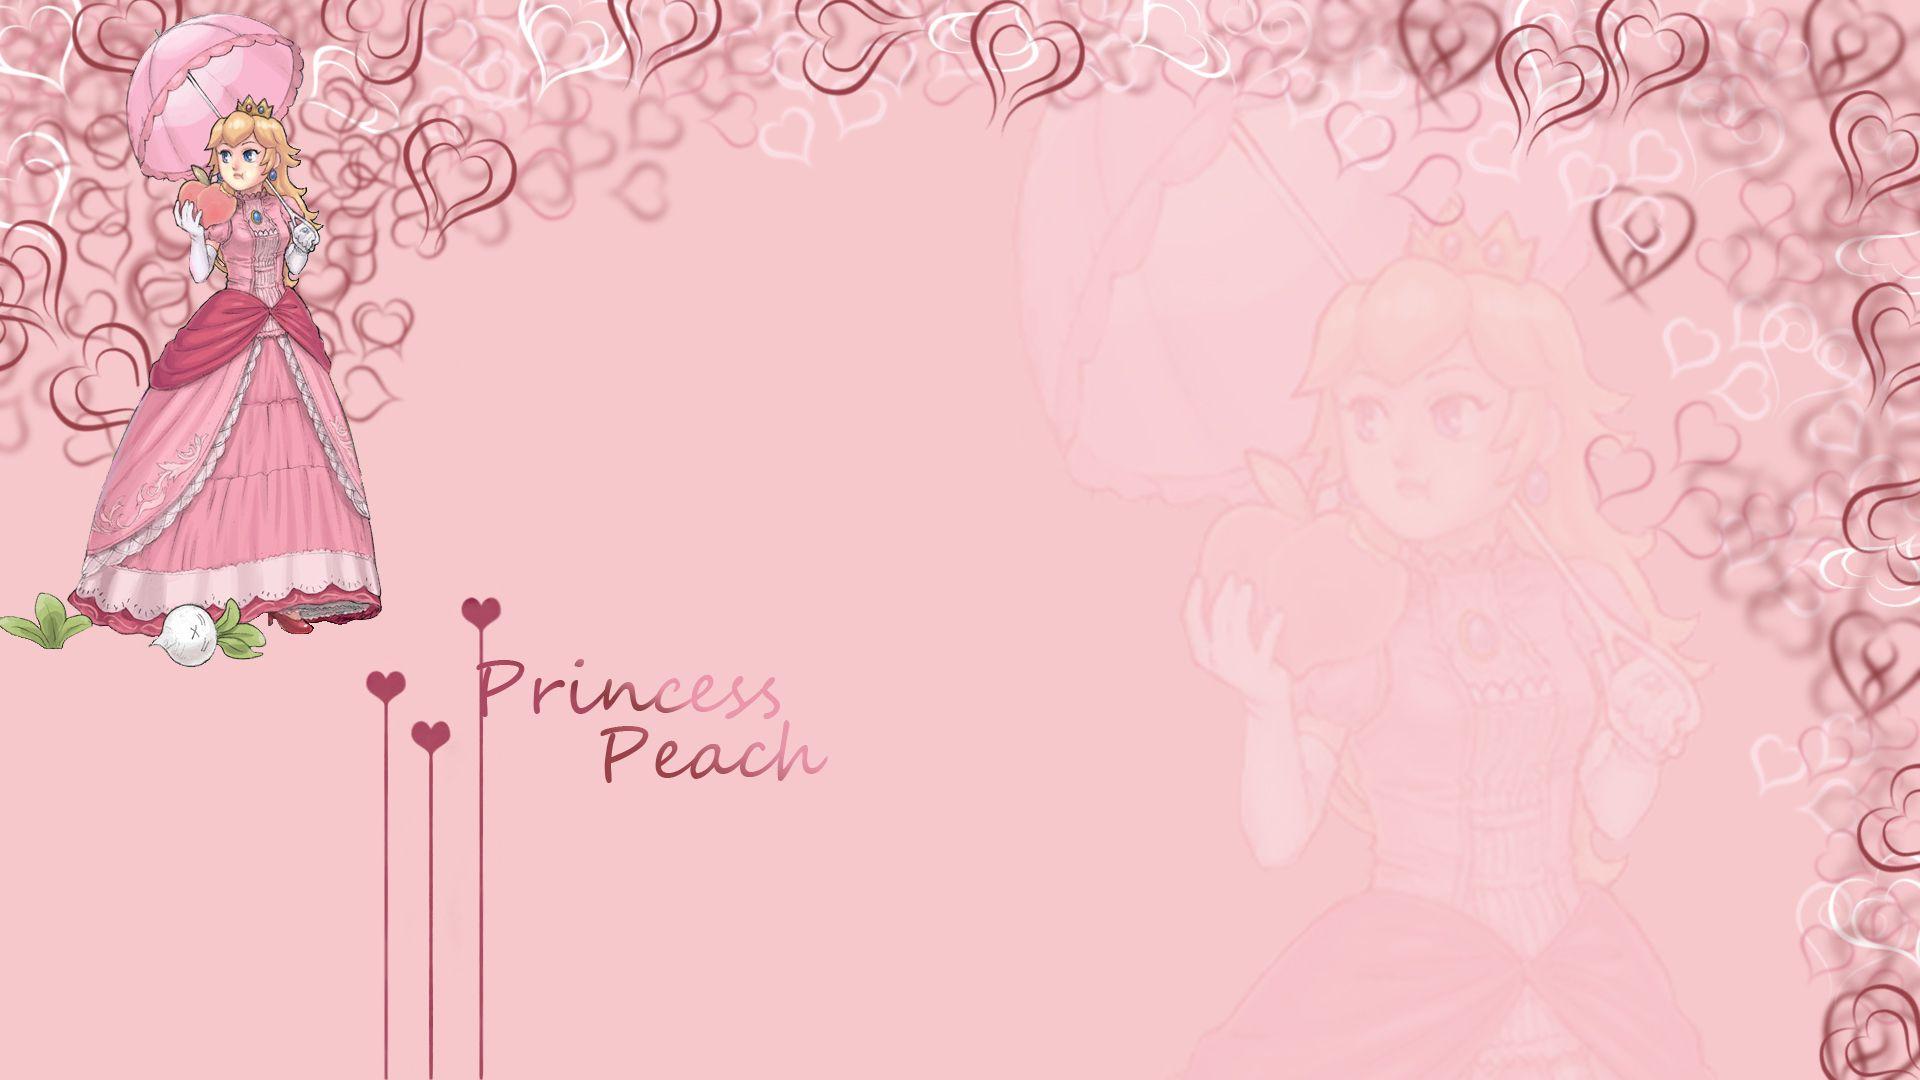 1920x1080 Princess Peach hình nền